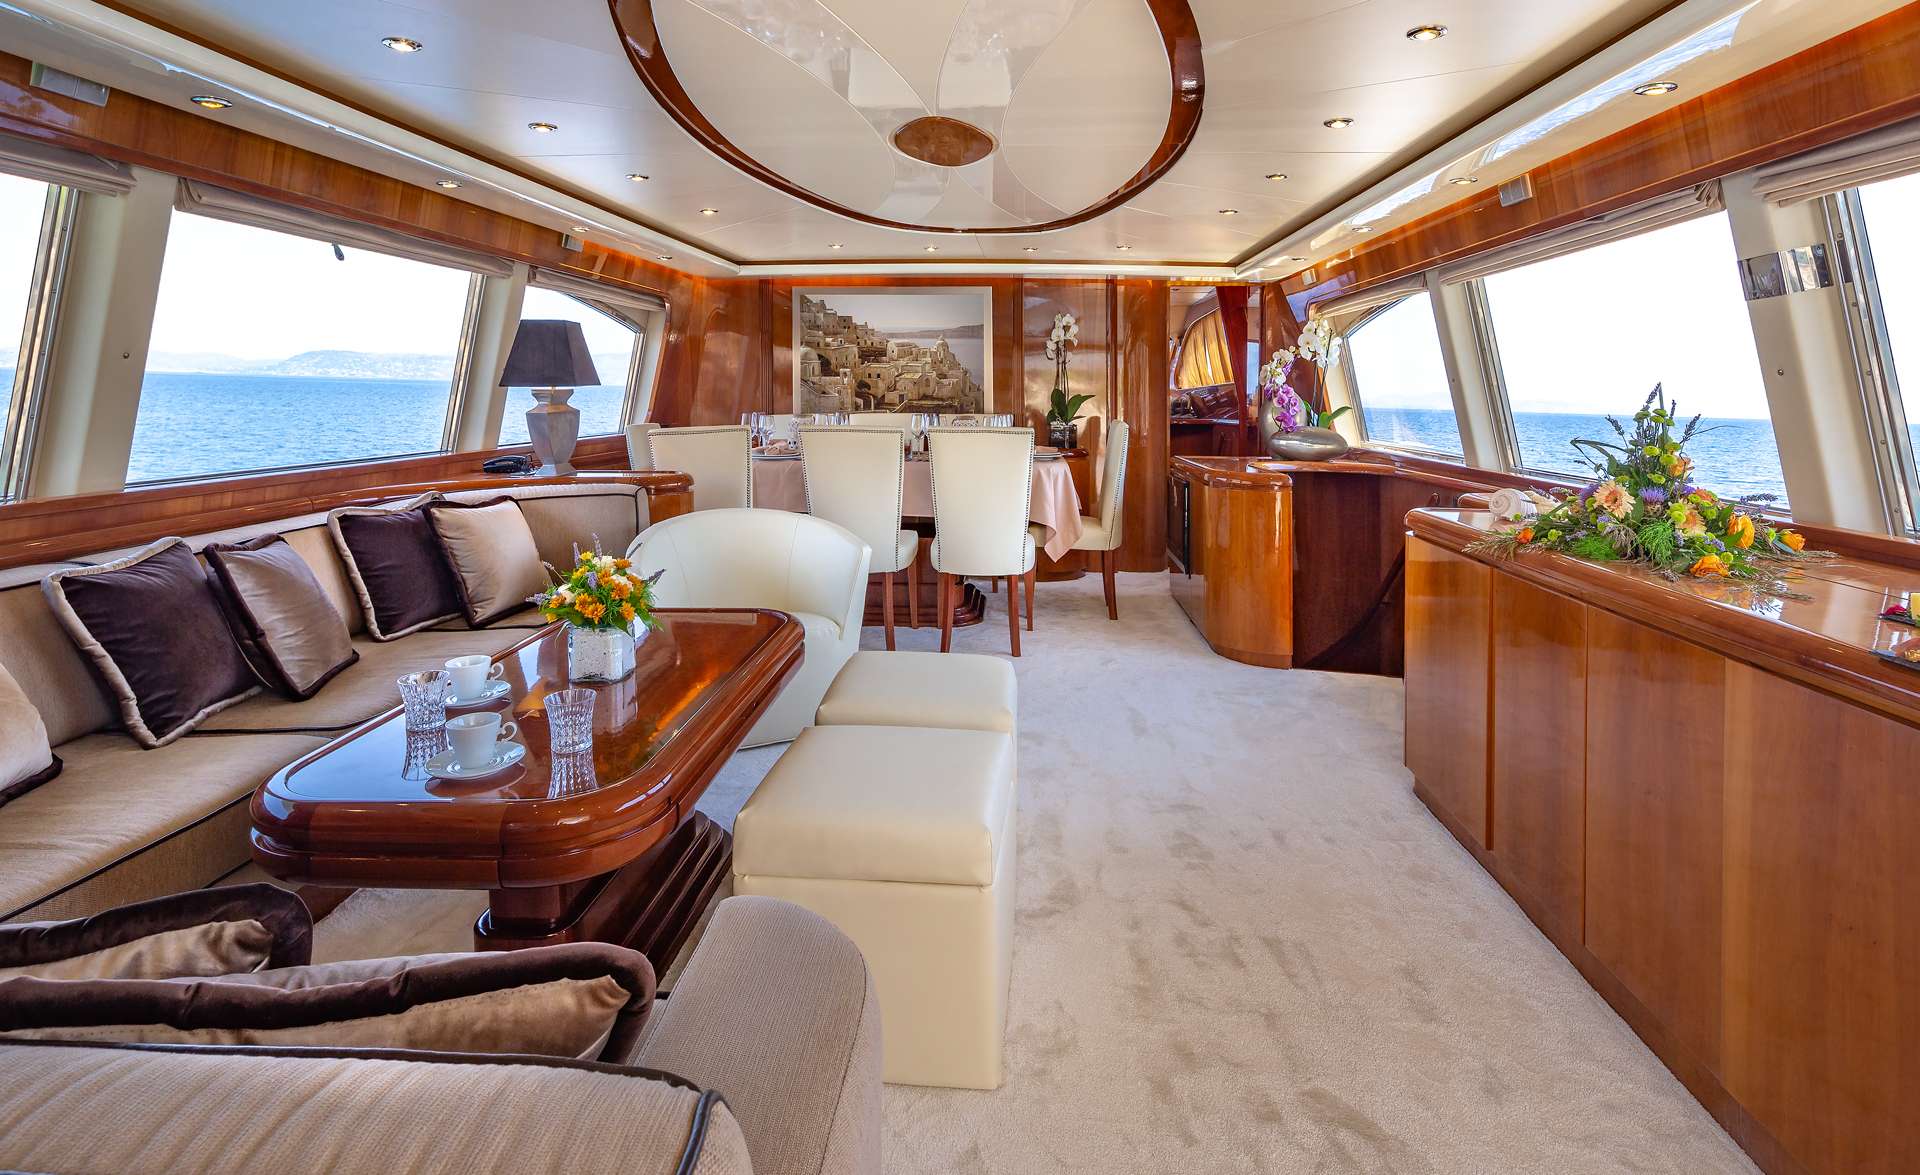 EFMARIA Yacht Charter - Salon